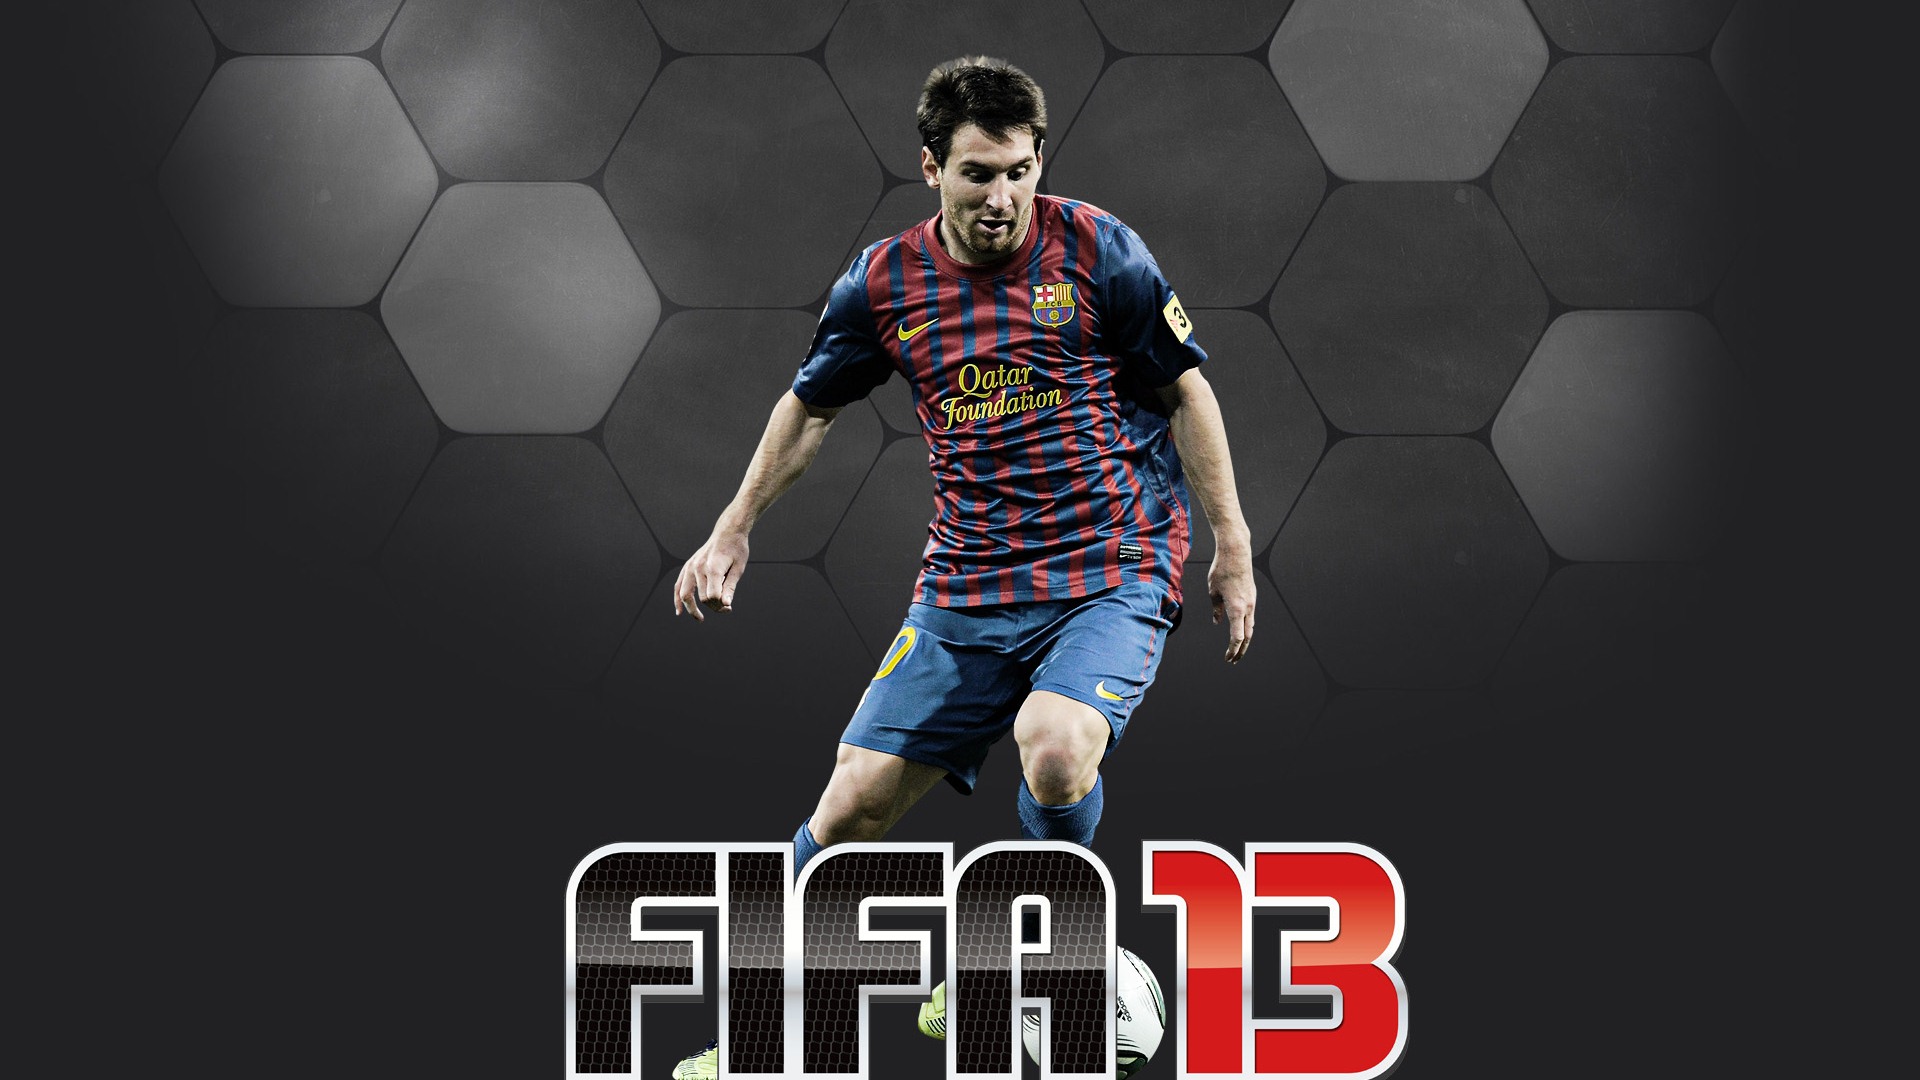 FIFA 13 游戏高清壁纸6 - 1920x1080